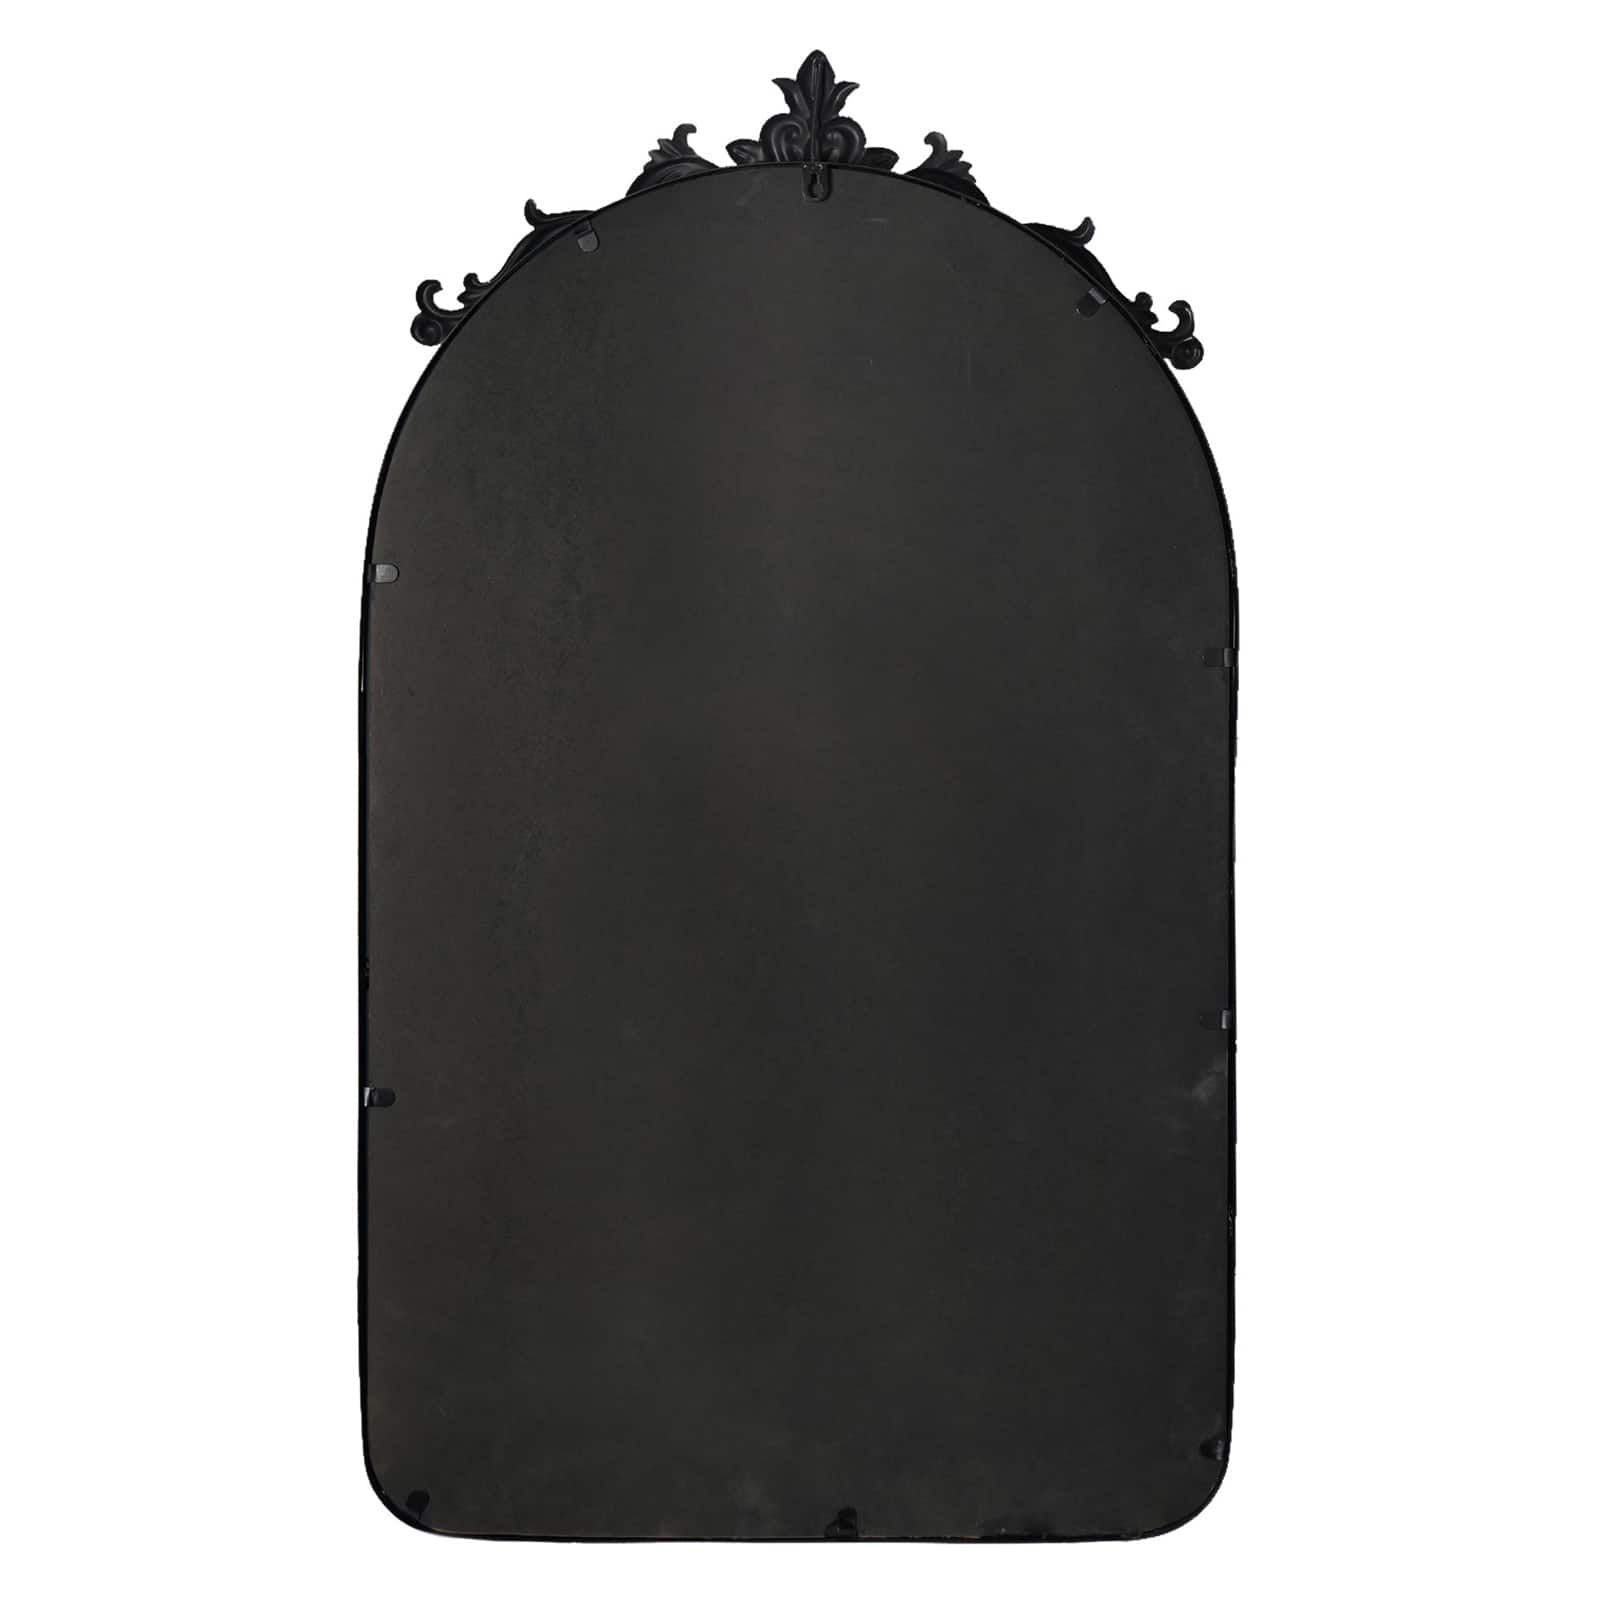 Head West Vintage Arched Black Ornate Metal Frame Mirror